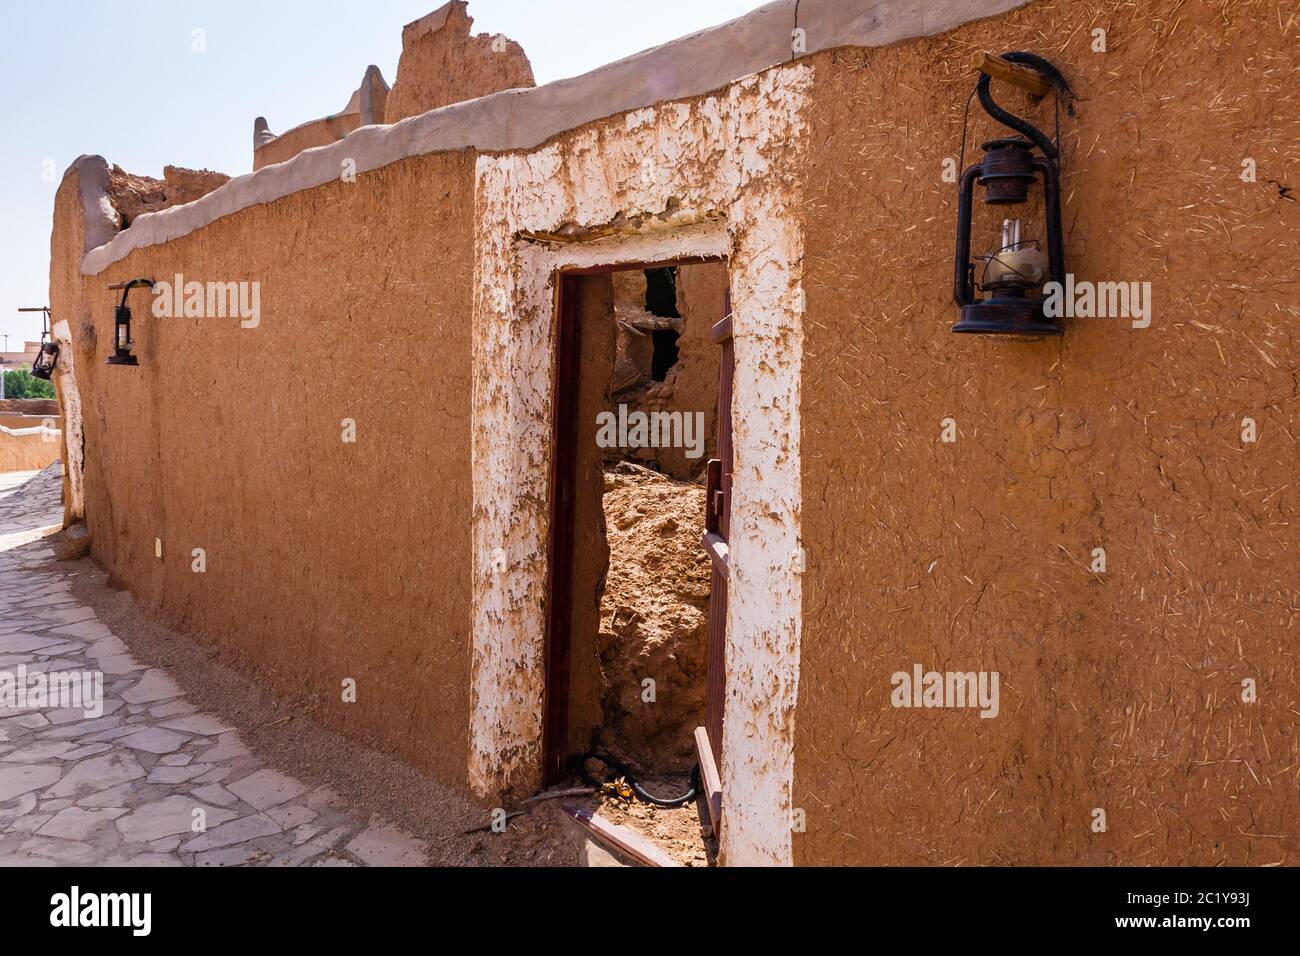 The traditional Arab mud brick architecture, Saudi Arabia Stock Photo